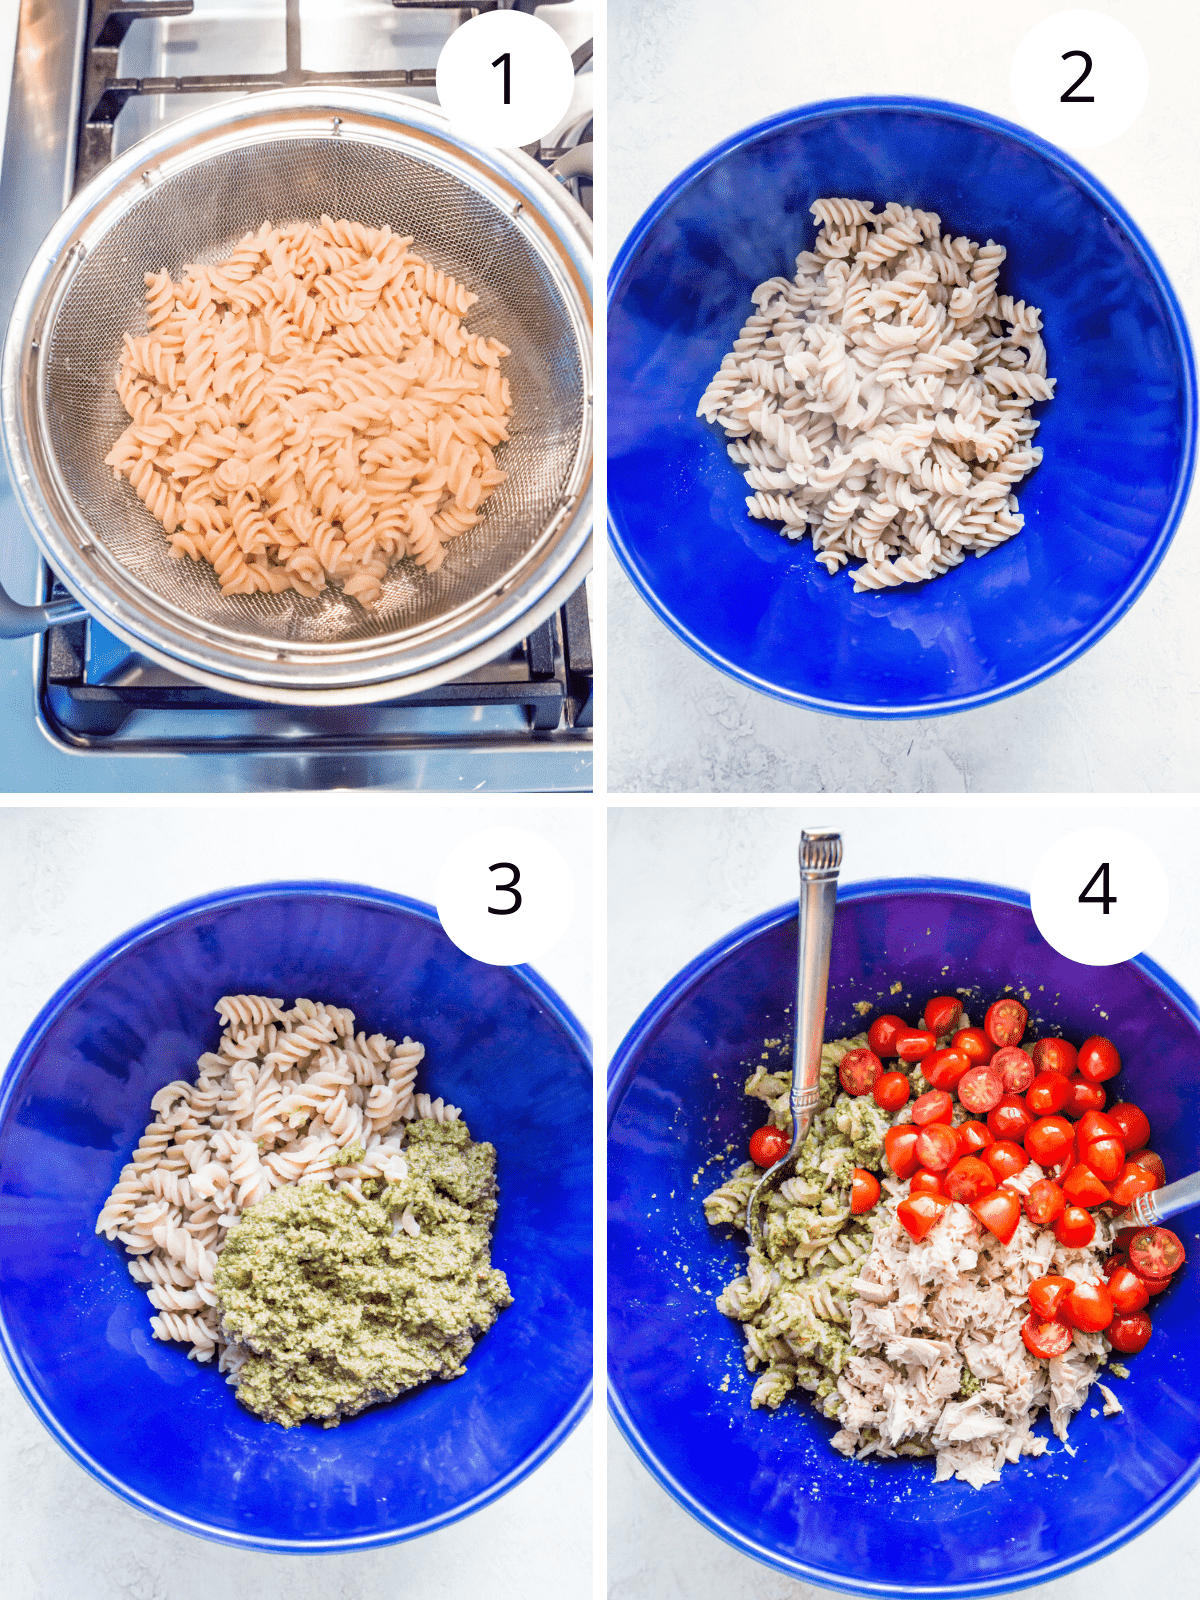 Directions for making tuna pesto pasta